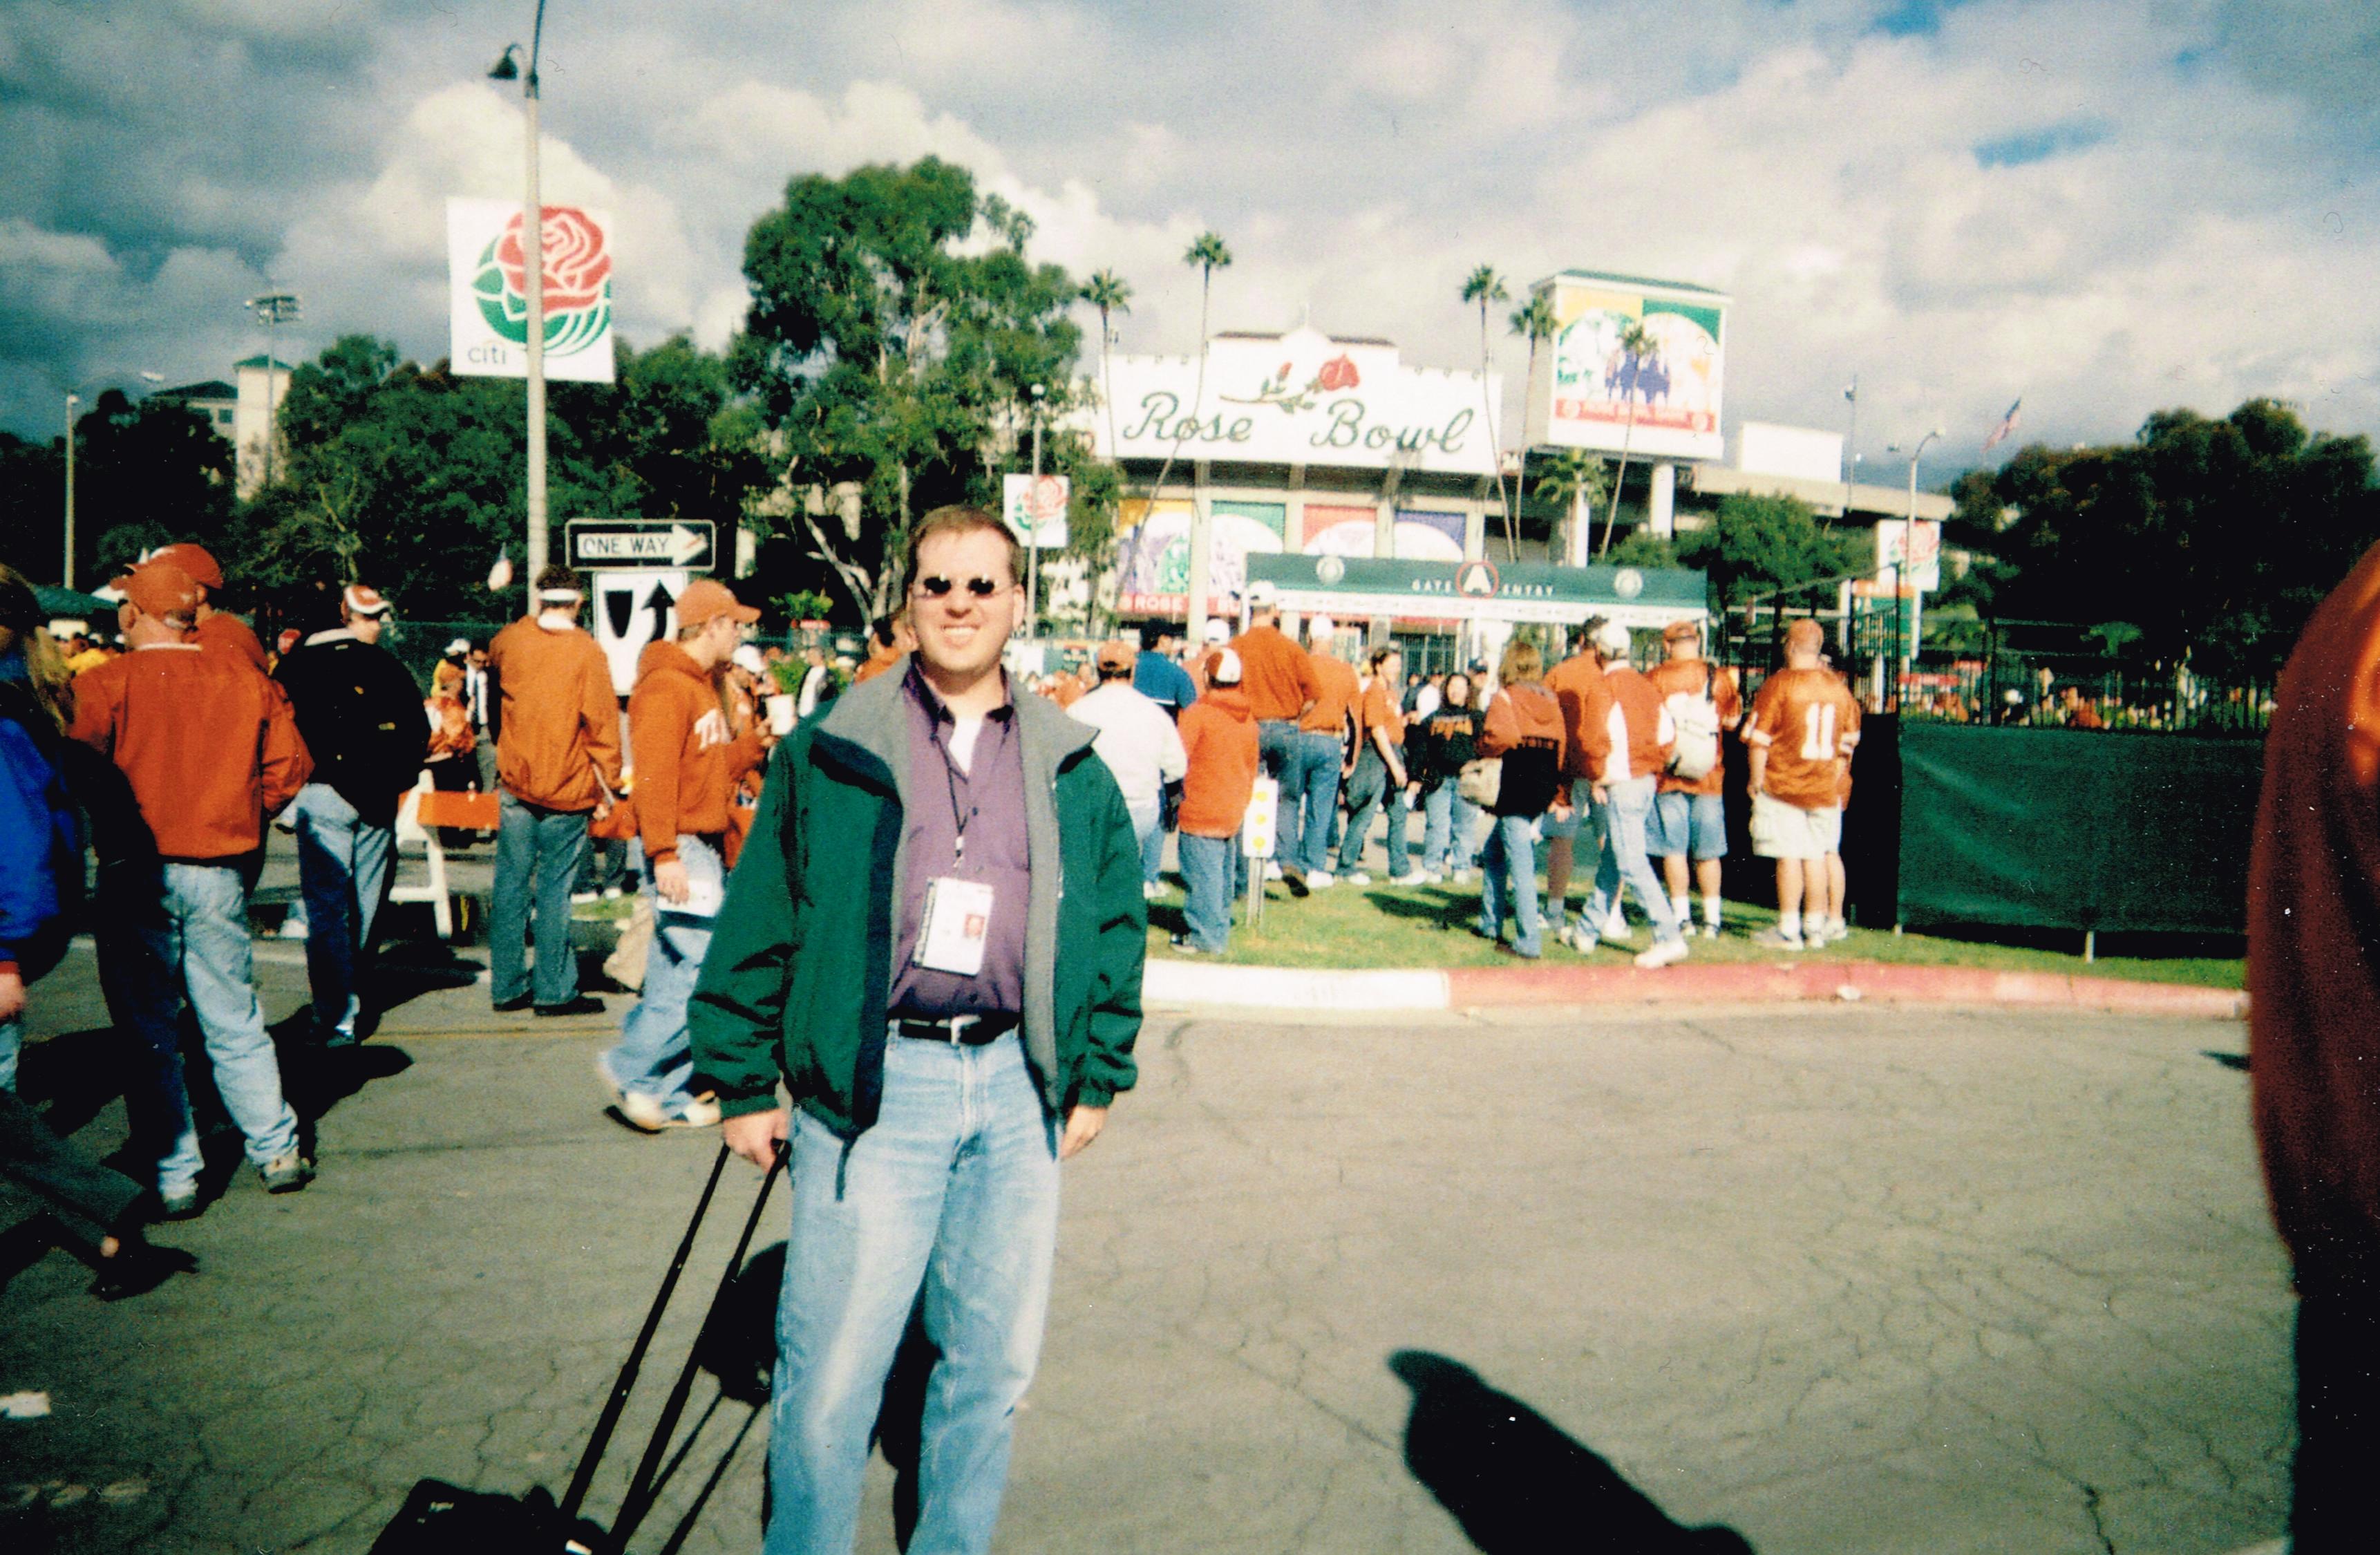 Former life at 2005 Rose Bowl